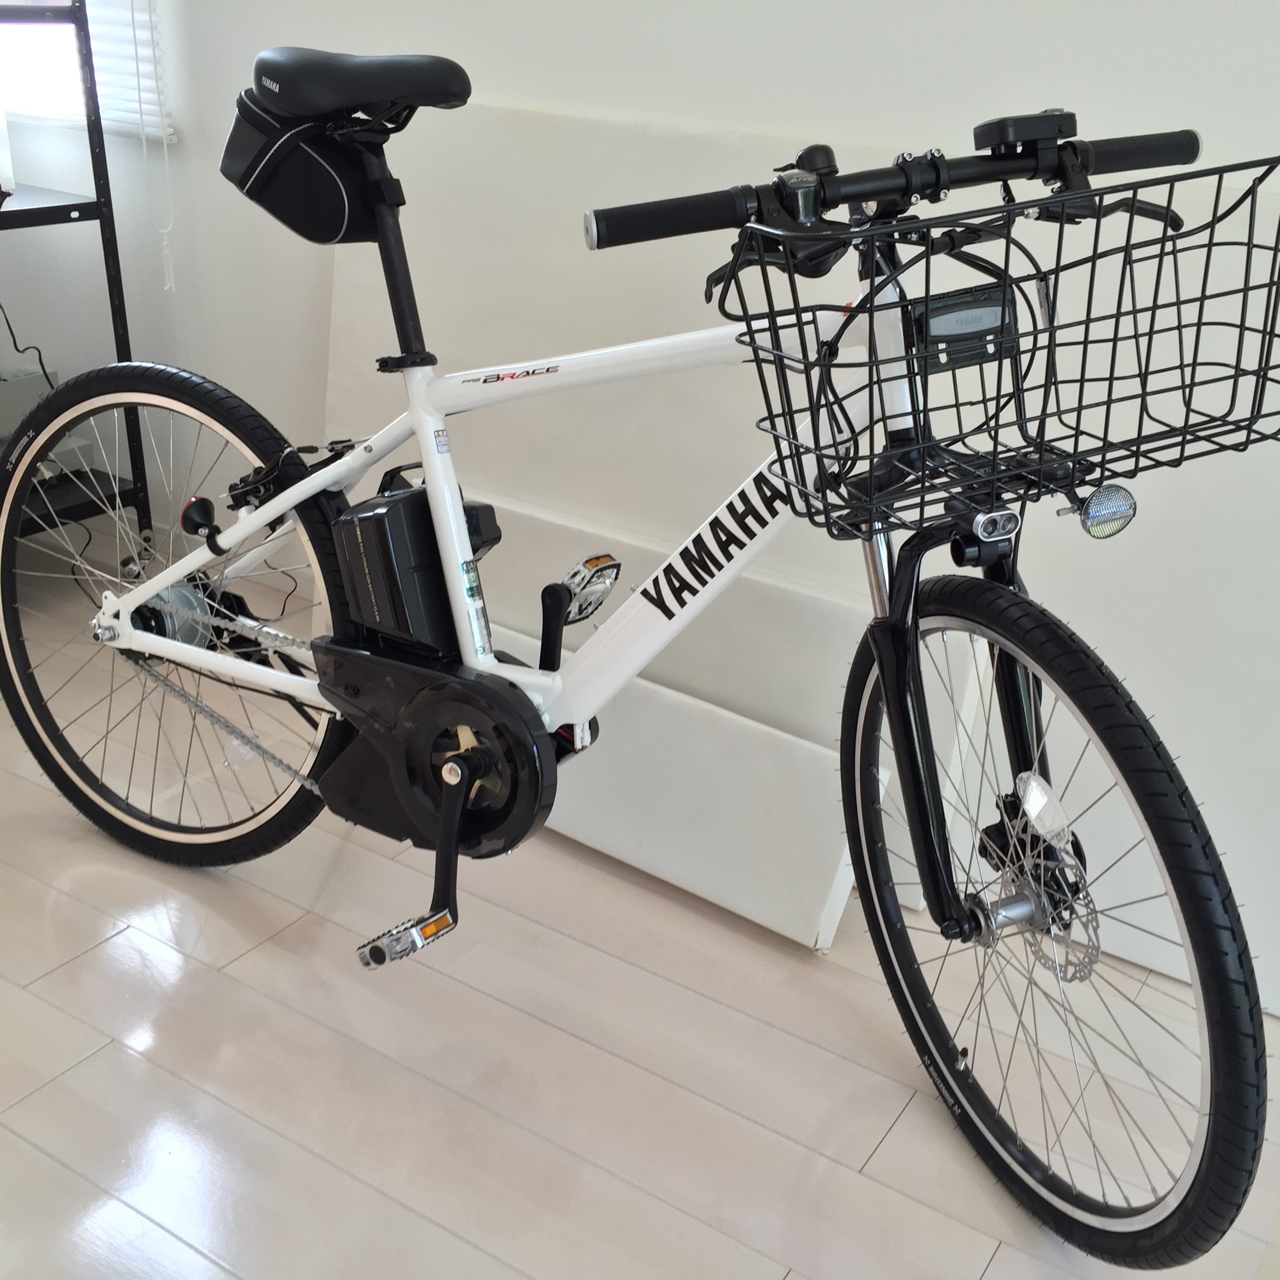 YAMAHA PAS Brace XL — スポーツモデルの電動アシスト自転車が届いた 